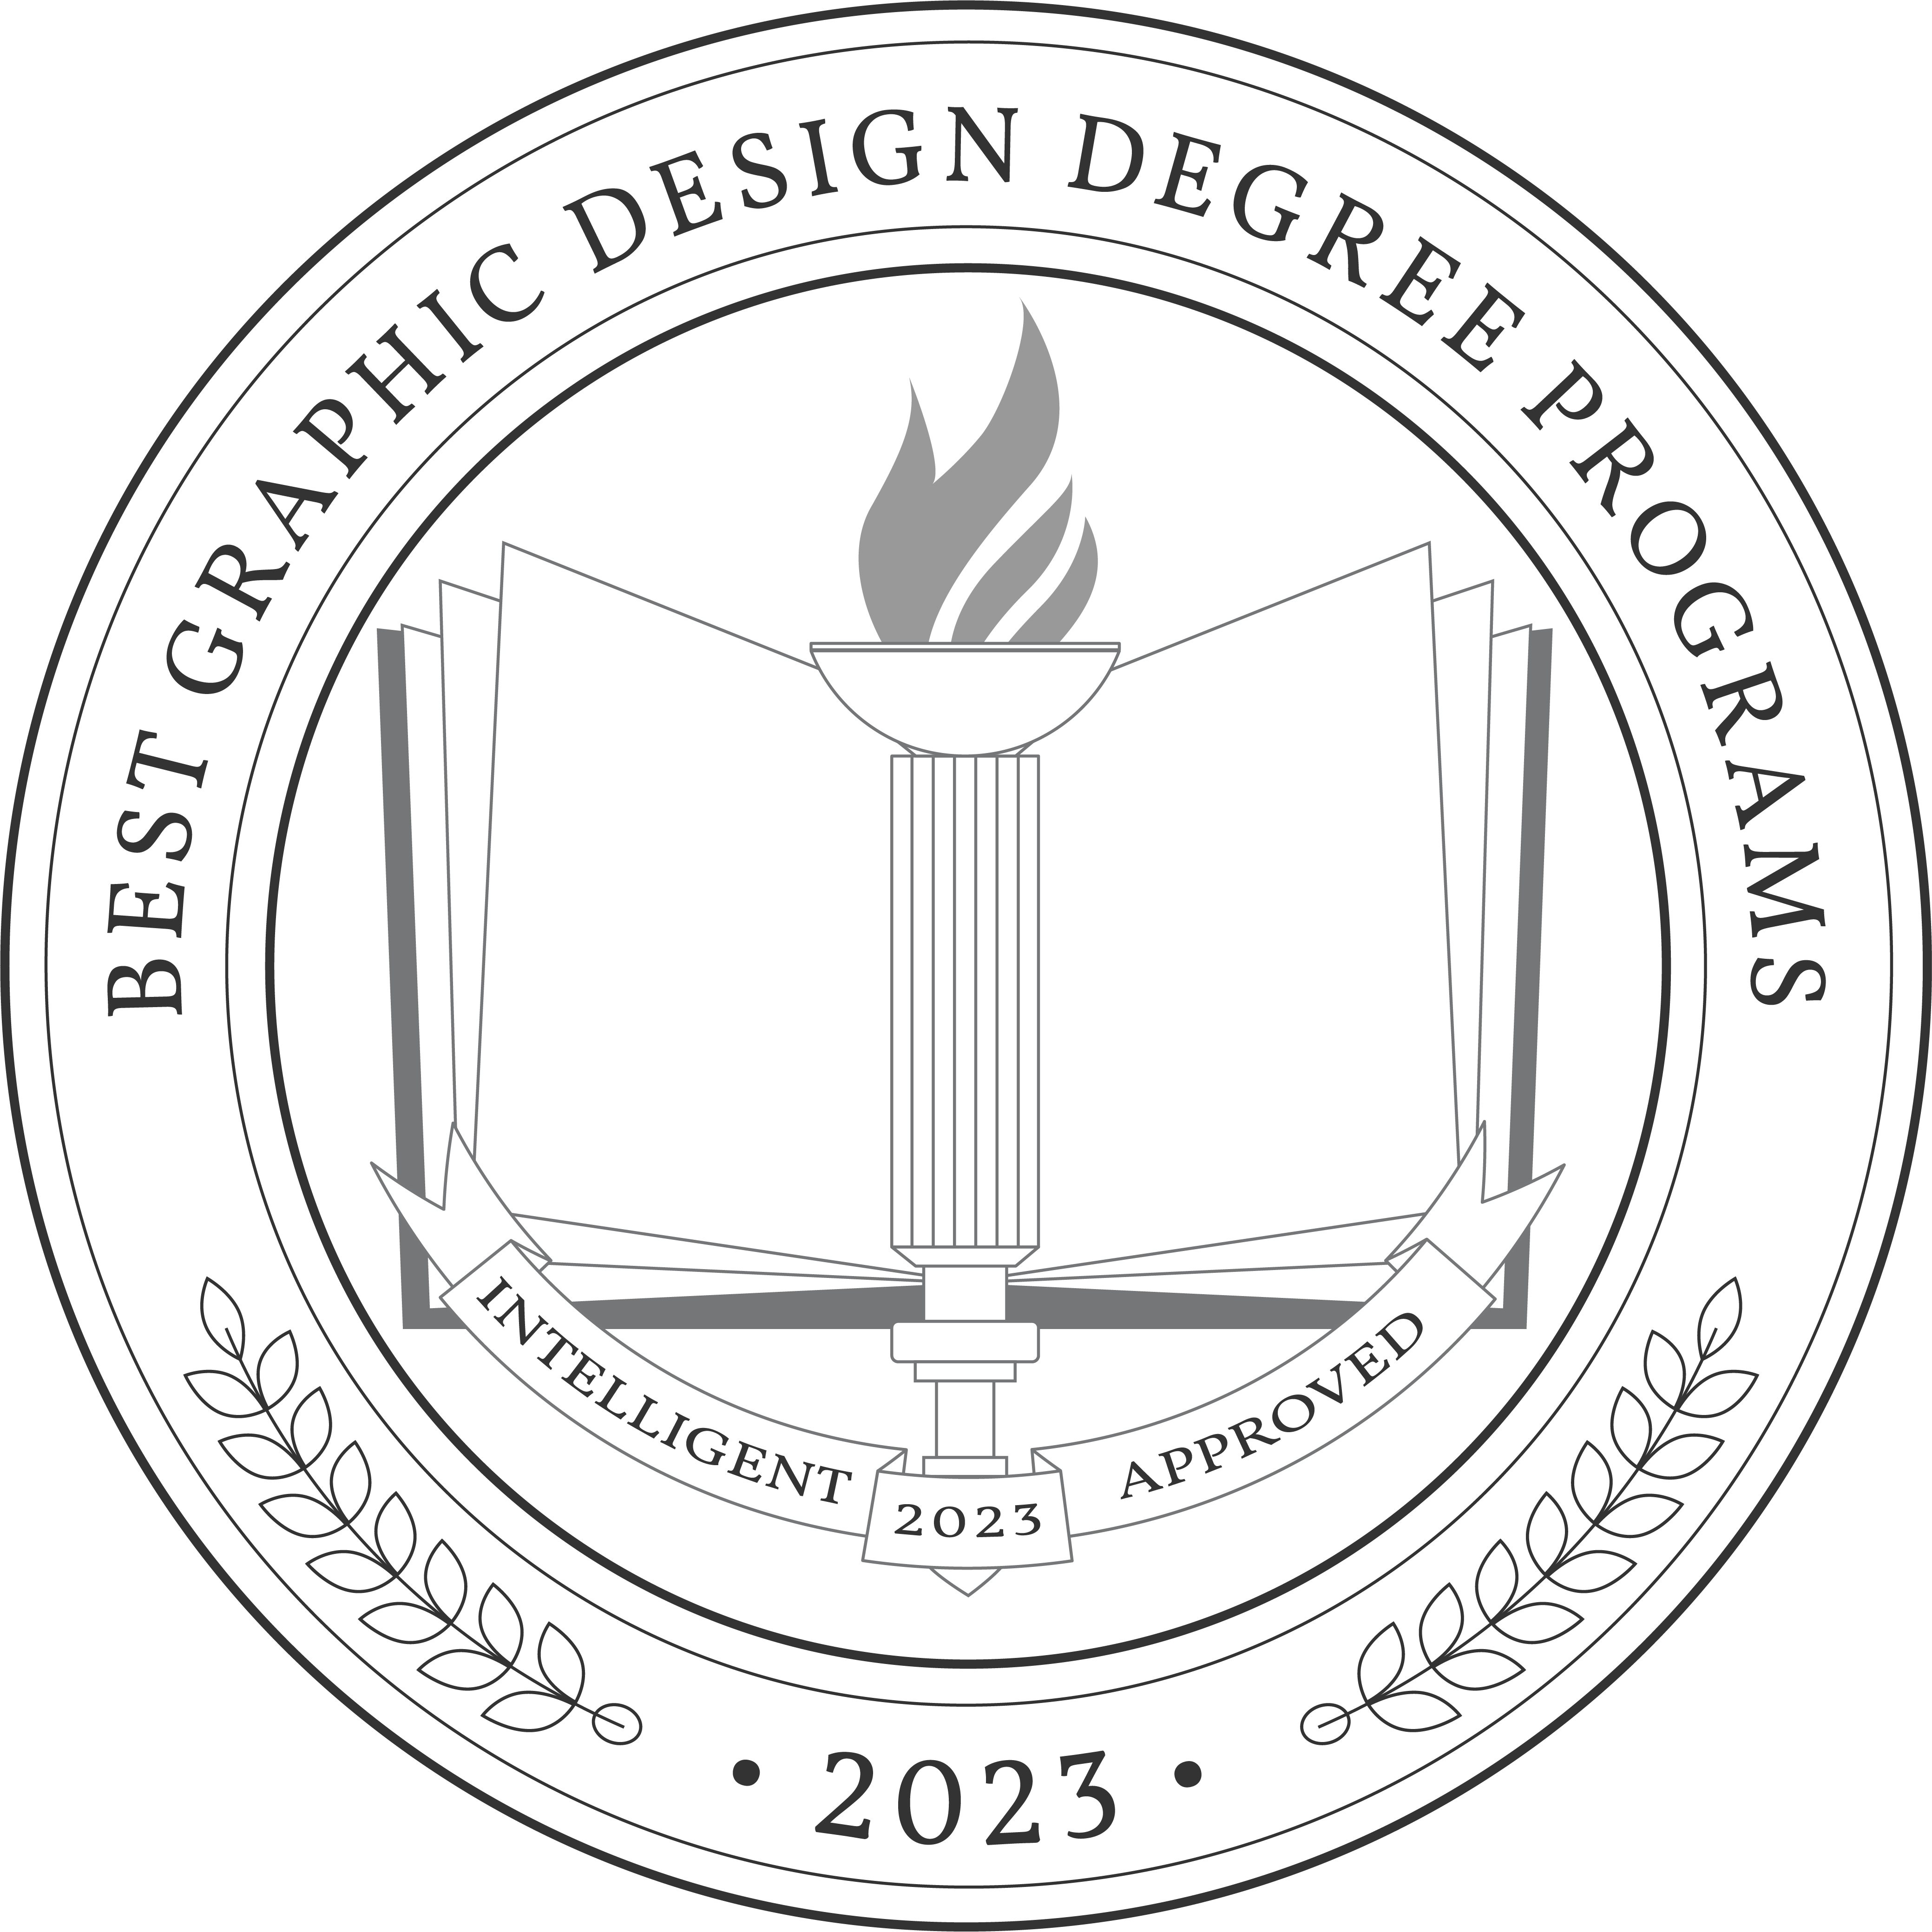 Best Graphic Design Degree Programs 2023